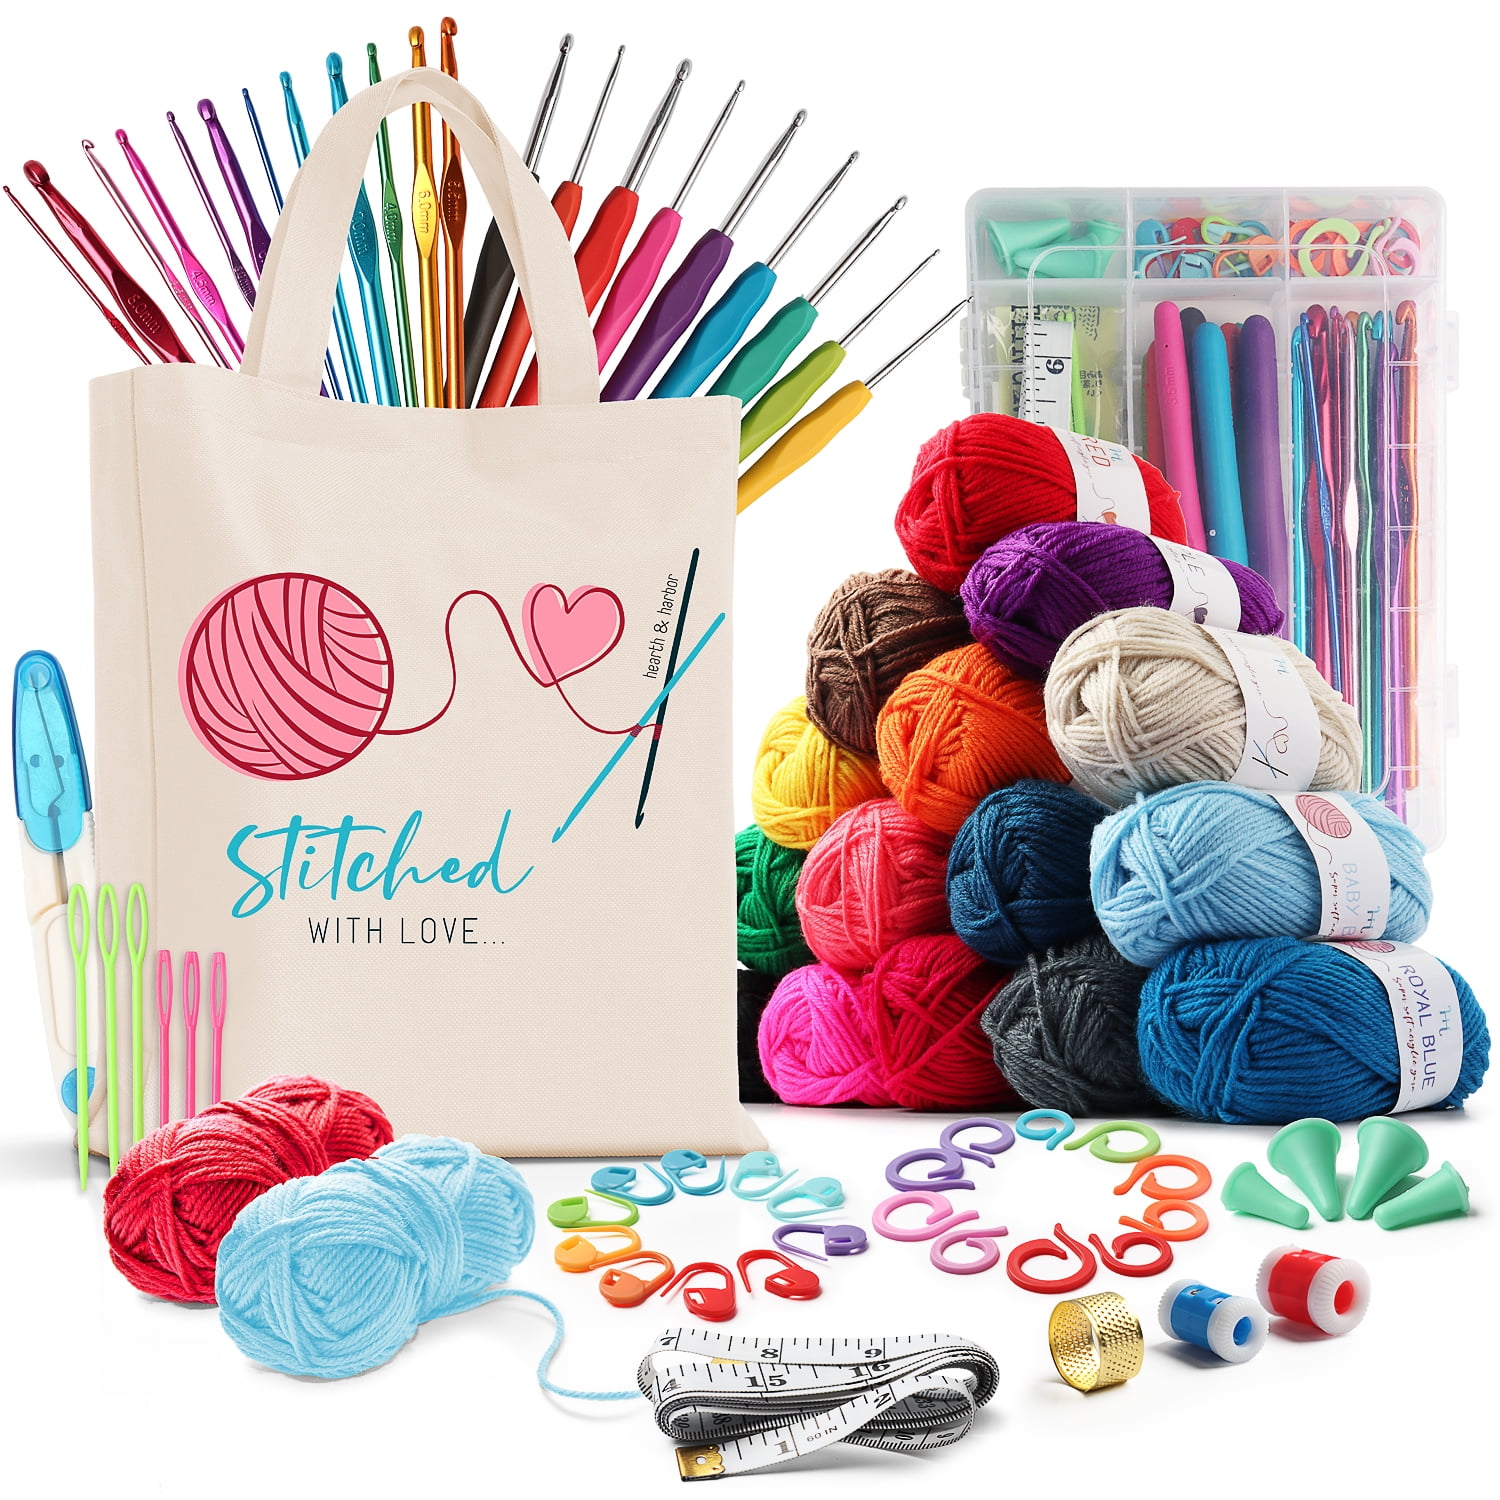 Hearth & Harbor Crochet Kit with Crochet Hooks Yarn Set 73 Piece - Premium Bundle Includes Yarn Balls, Needles, Accessories Kit, Canvas Tote Bag 